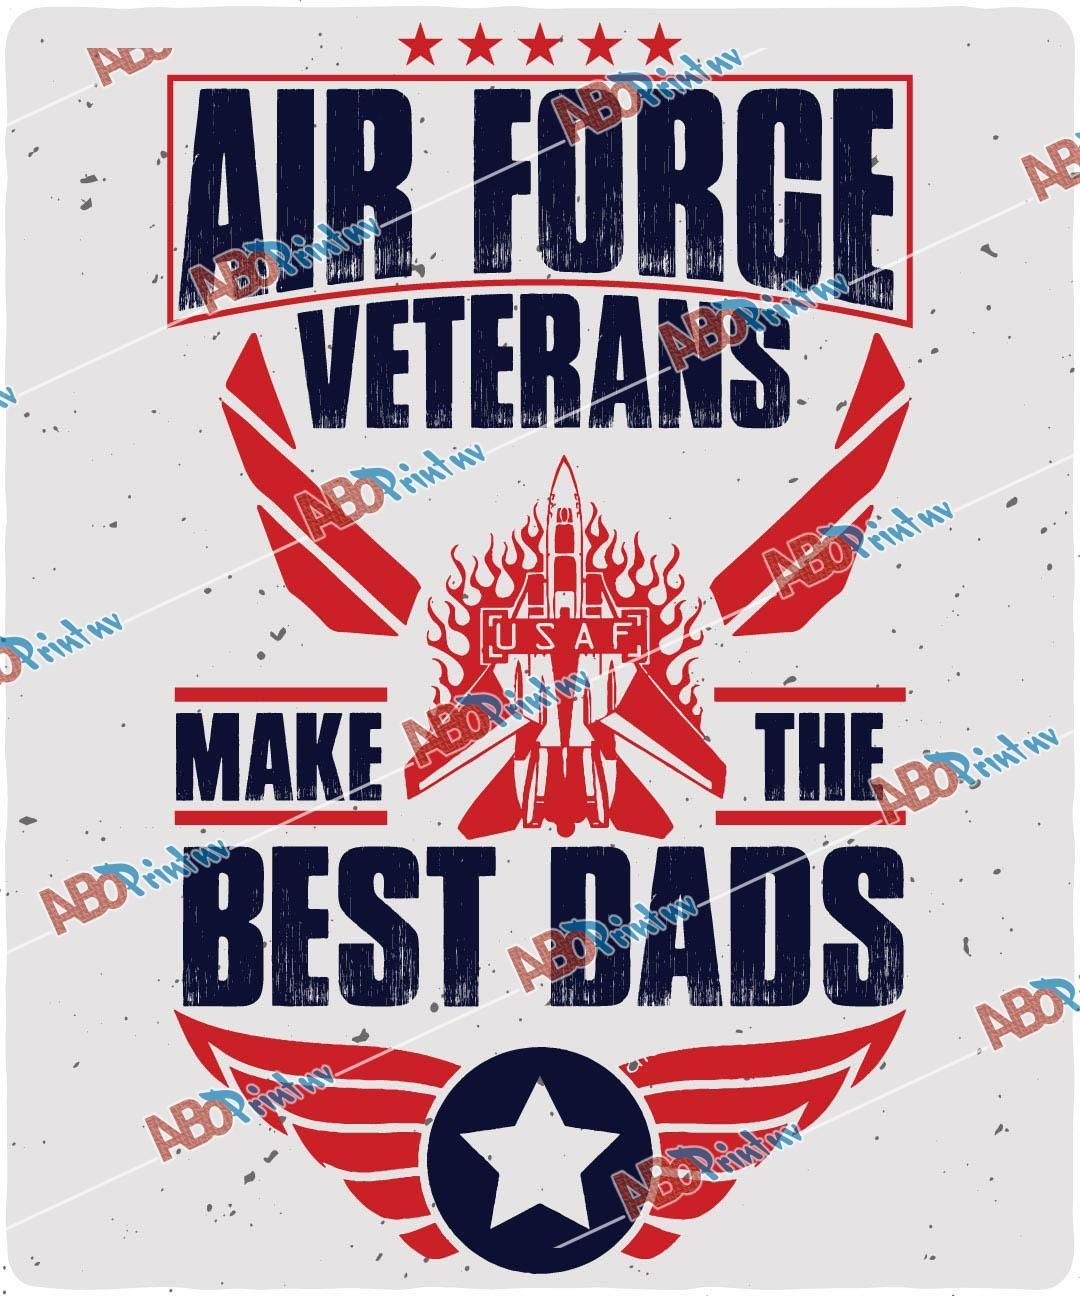 Air force veterans make the best dads.jpg